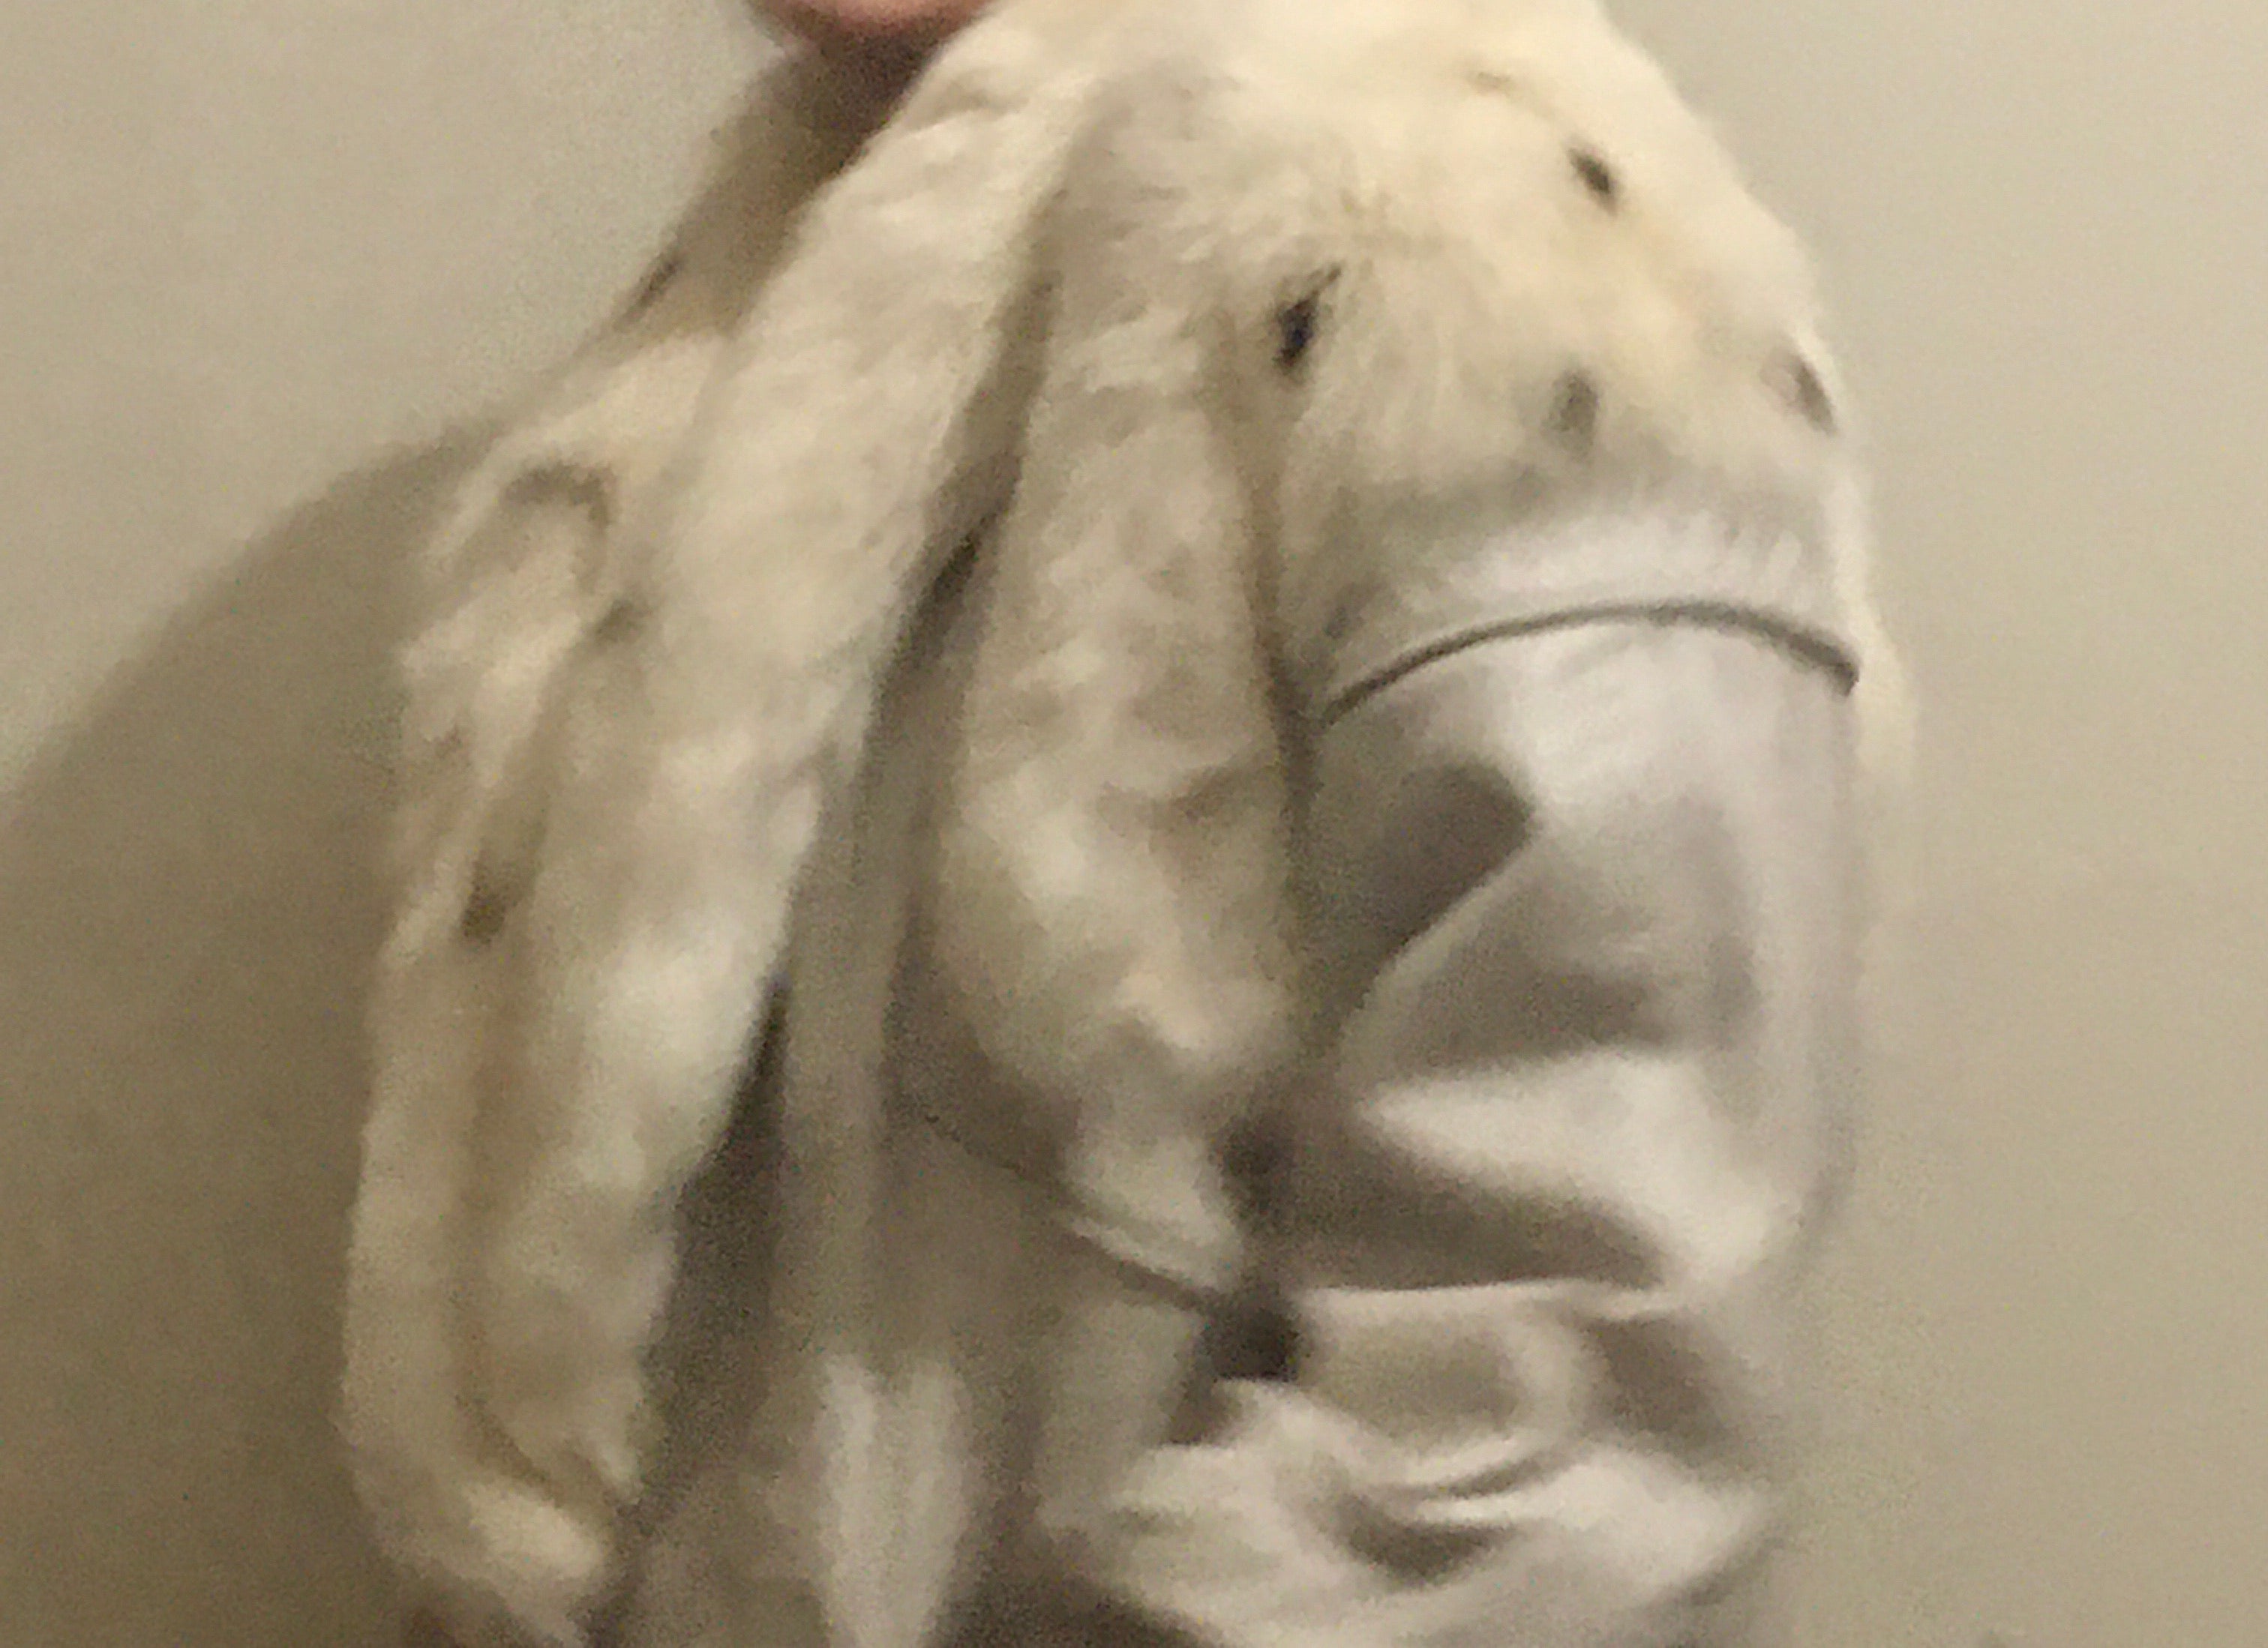 Vintage White Leather/Fur Jacket